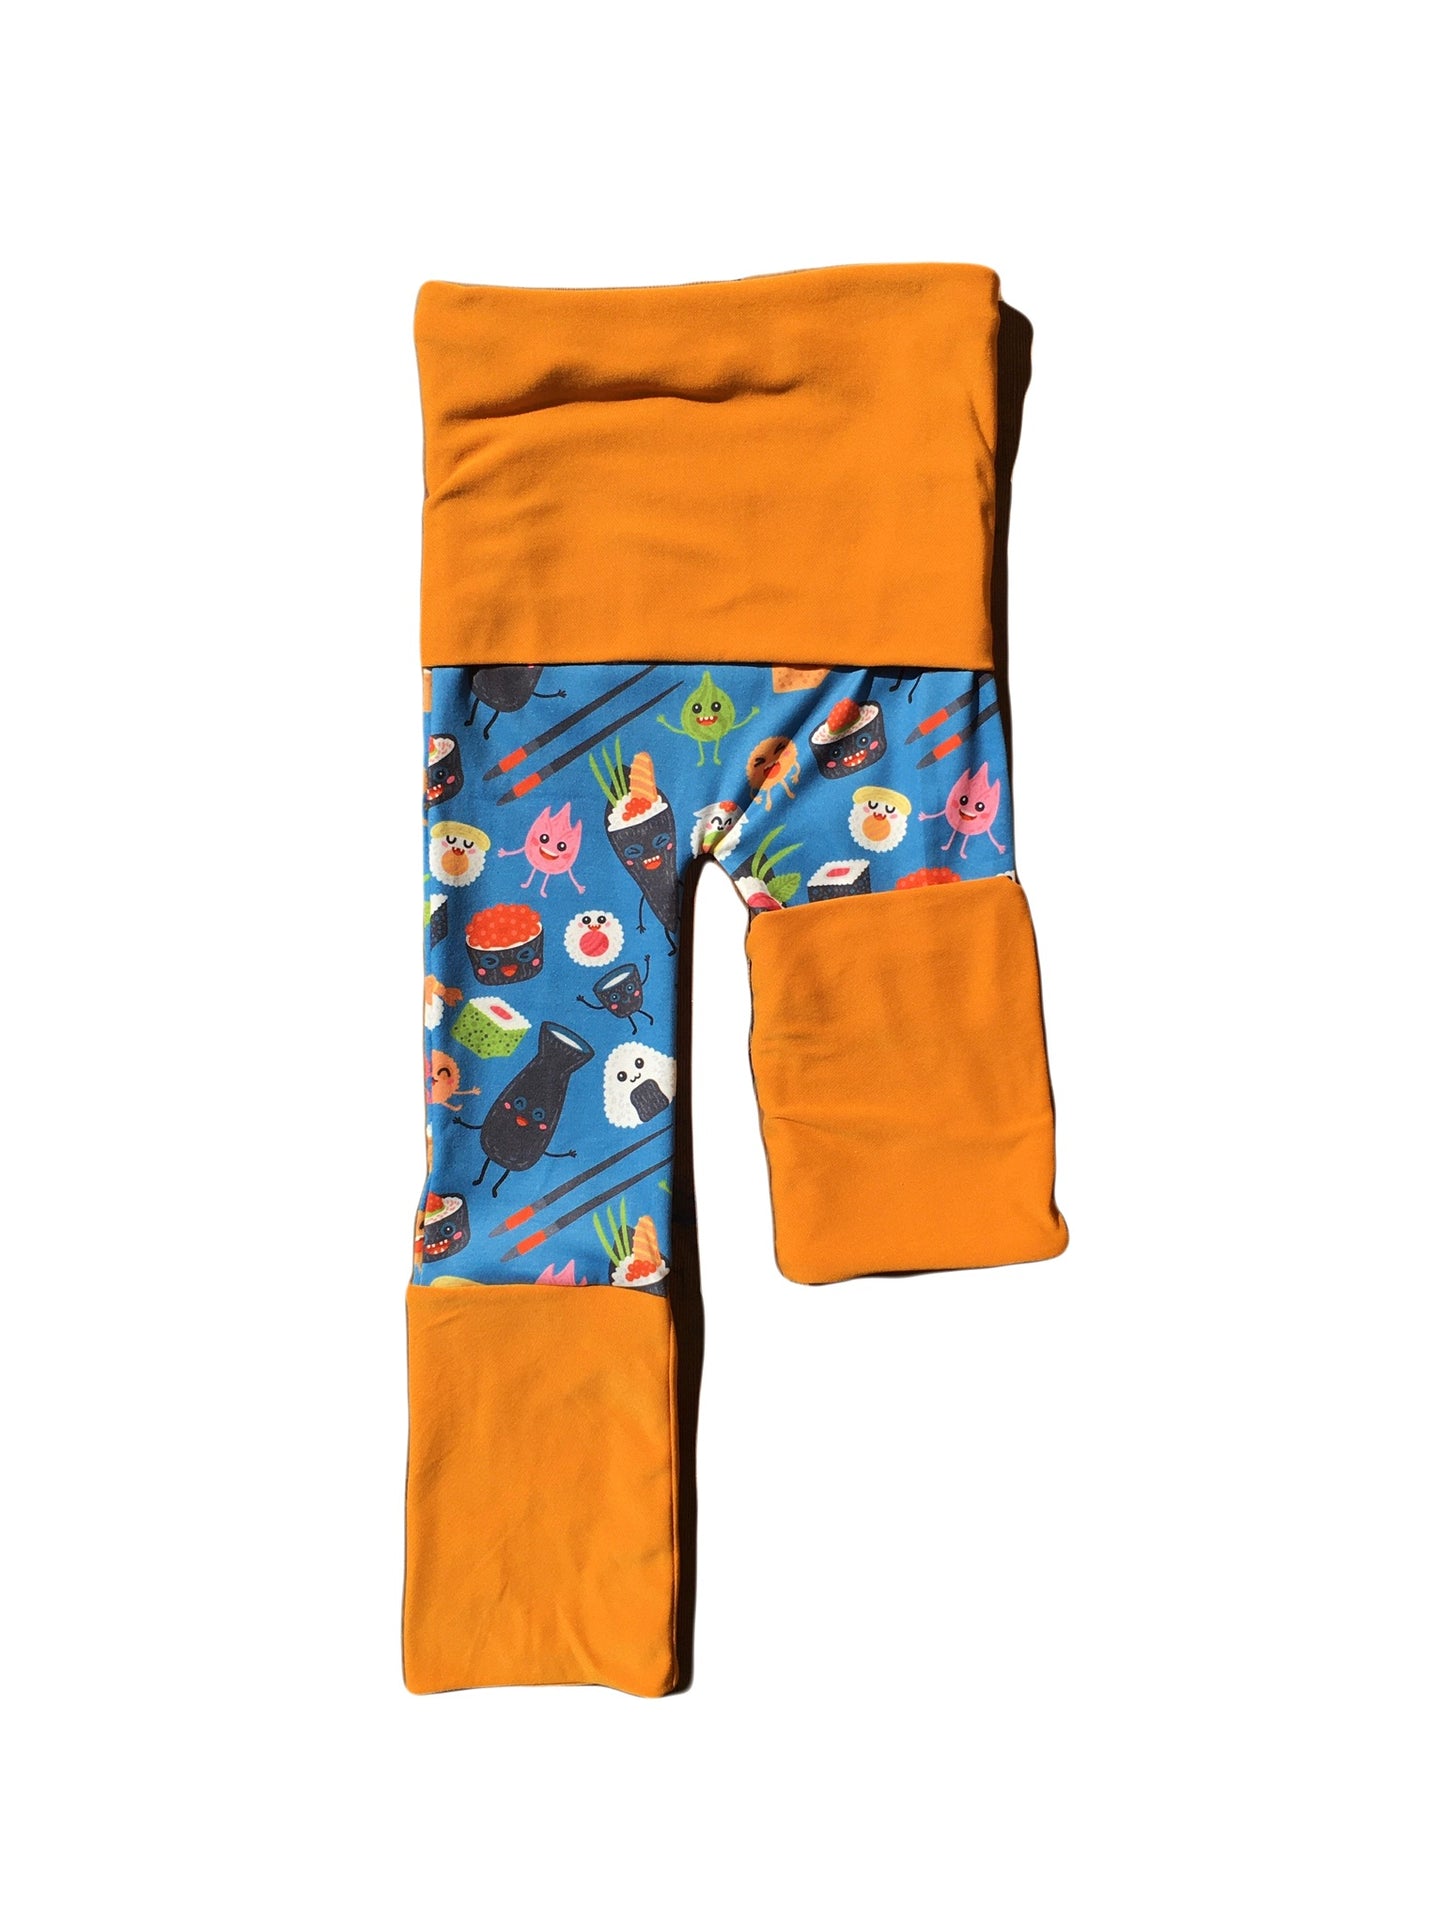 Adjustable Pants - Sushi with Orange